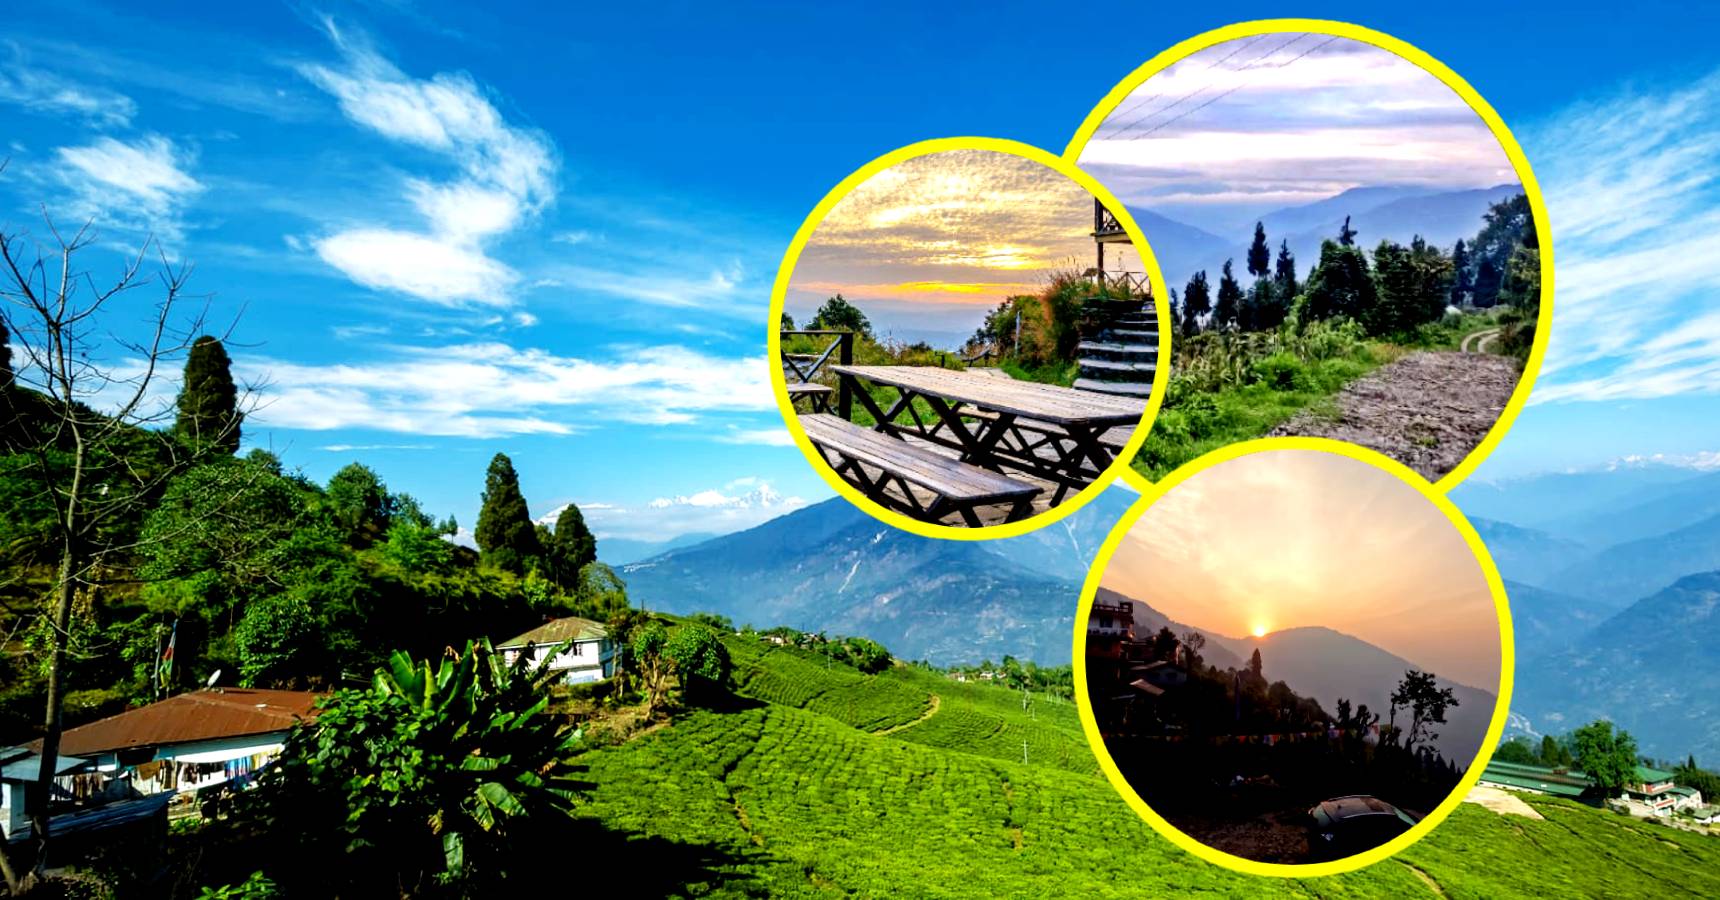 Travel,Travel news,Travel destination,Majhidhura,Darjeeling,Offbeat location,Offbeat travel destination,North Bengal,ভ্রমণ,ভ্রমণ সংবাদ,ট্রাভেল ডেস্টিনেশন,মাঝিধুরা,দার্জিলিং,অফবিট লোকেশন,অফবিট ট্রাভেল ডেস্টিনেশন,উত্তরবঙ্গ,Bangla khobor,বাংলা খবর